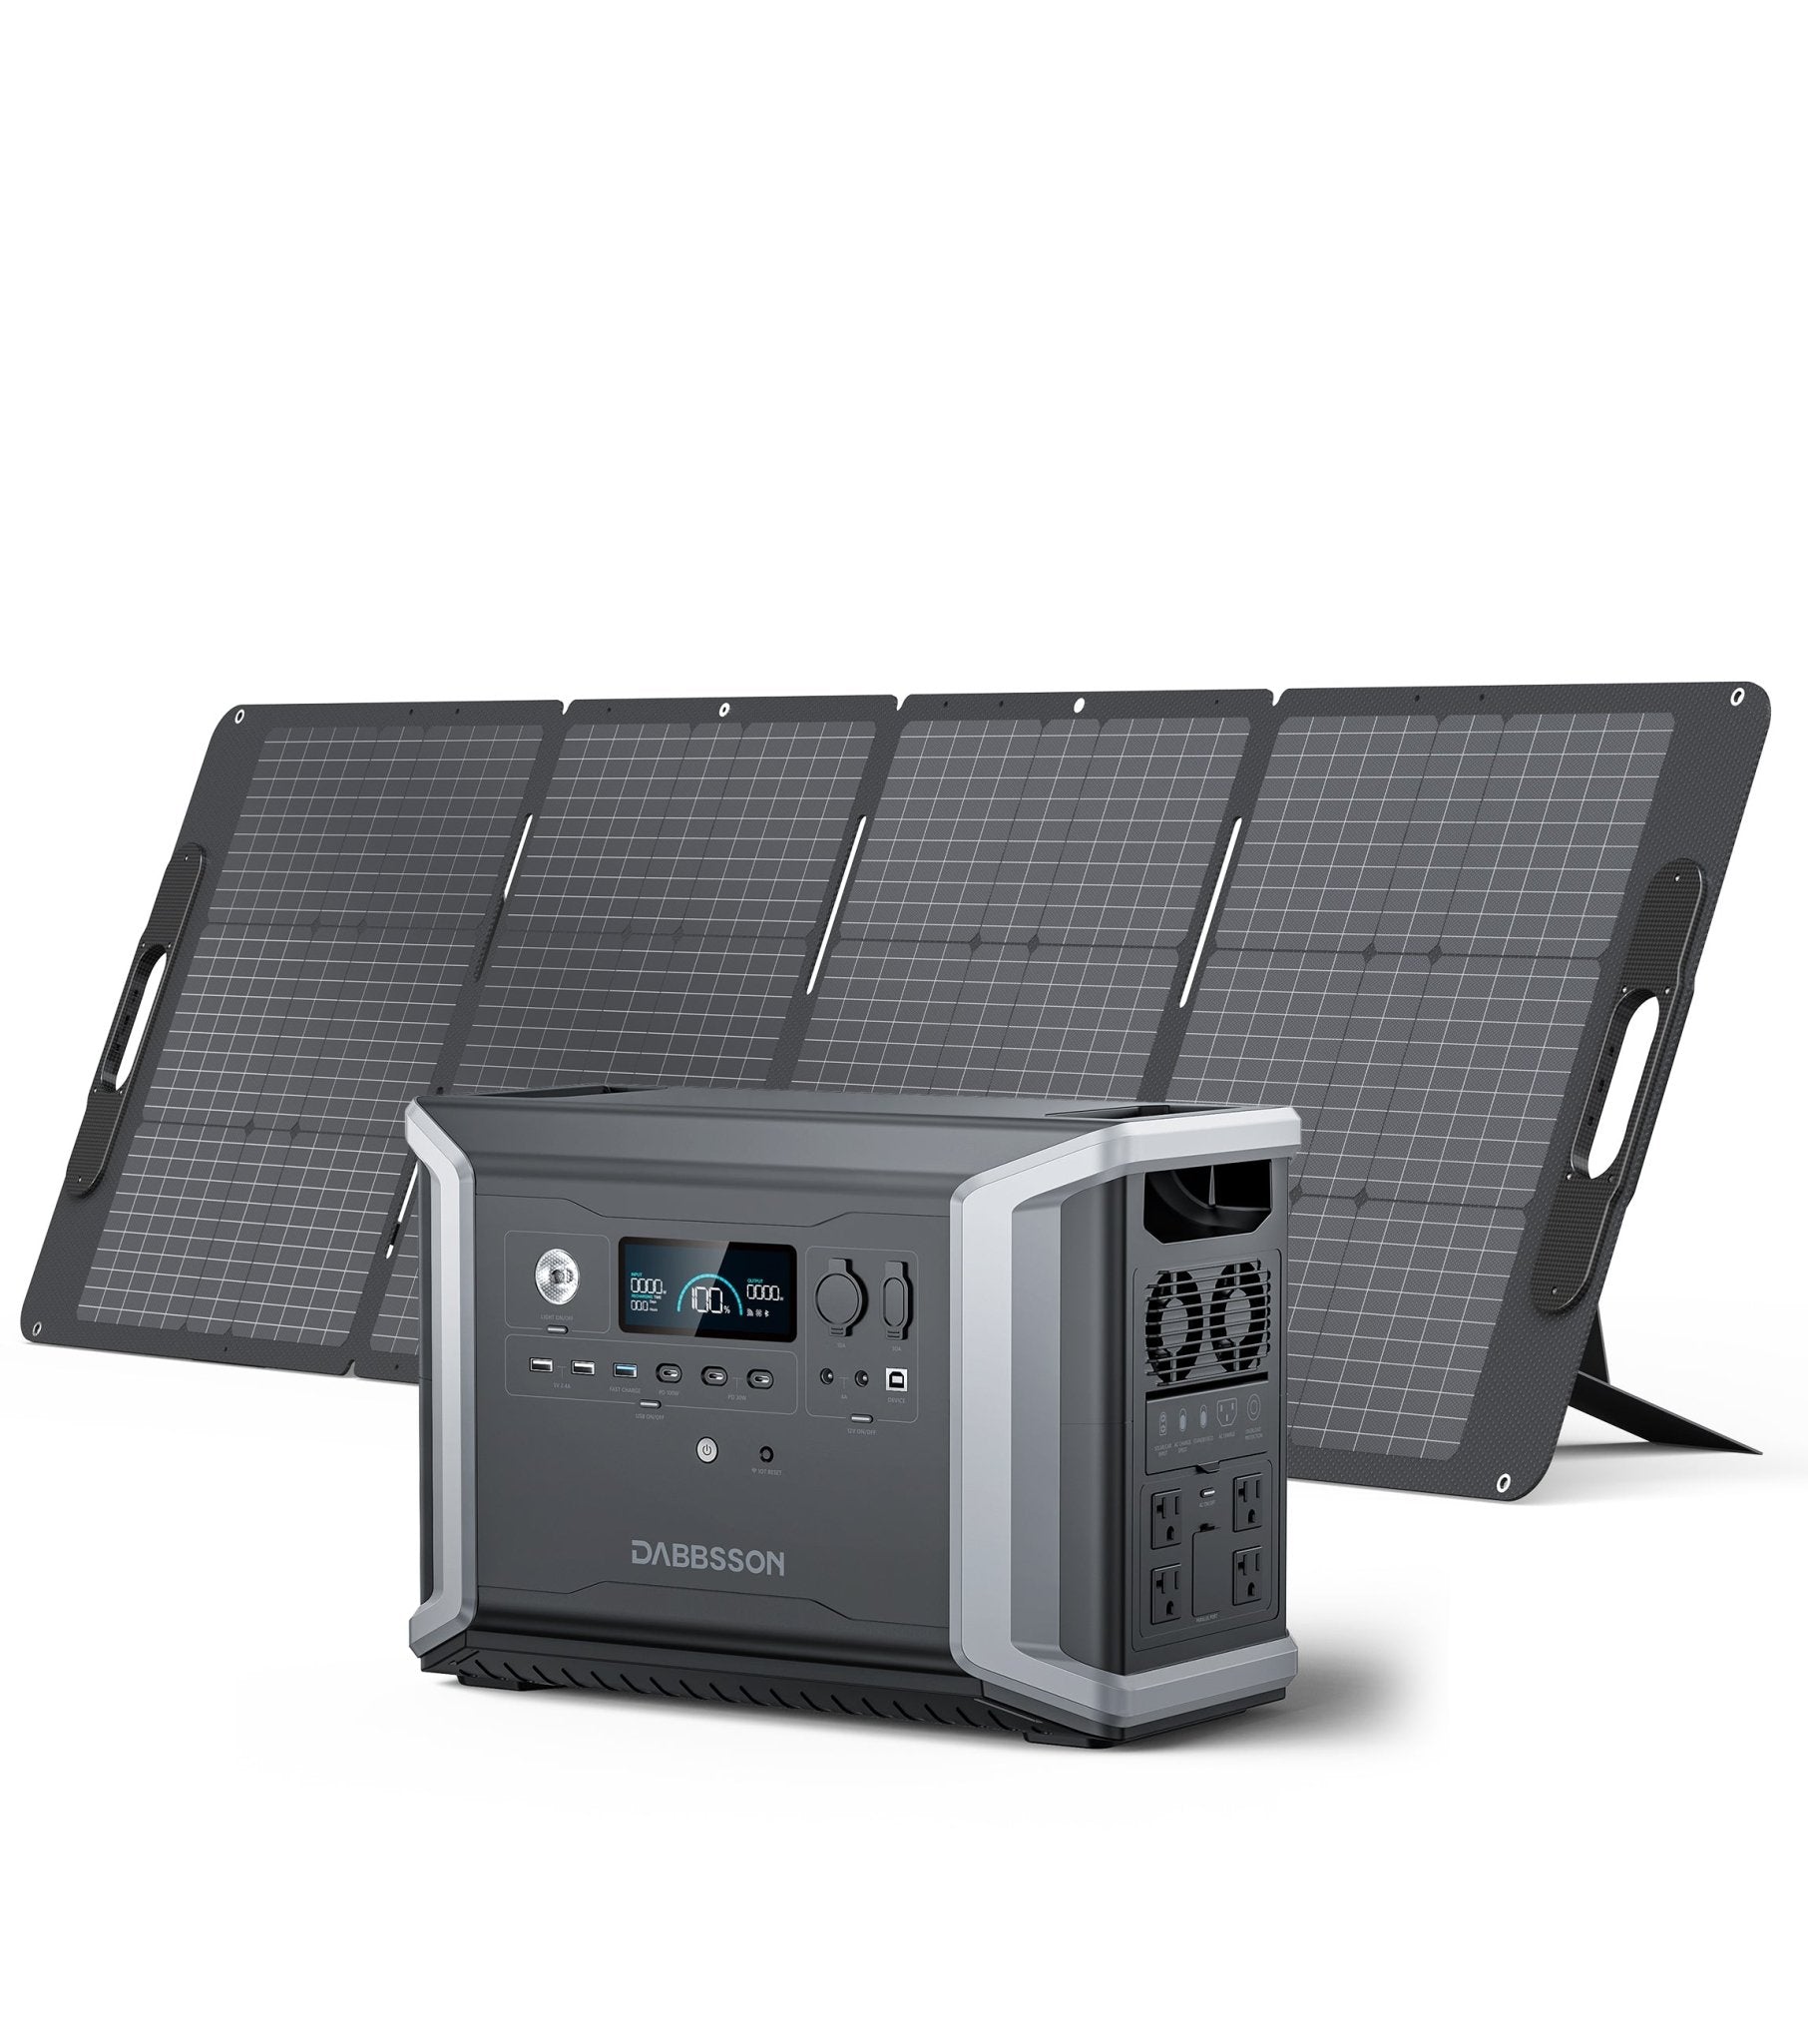 Dabbsson DBS2300 Plus Solar Generator ポータブル電源 セット - 2330Wh | 2200W | 210W - Dabbsson JP